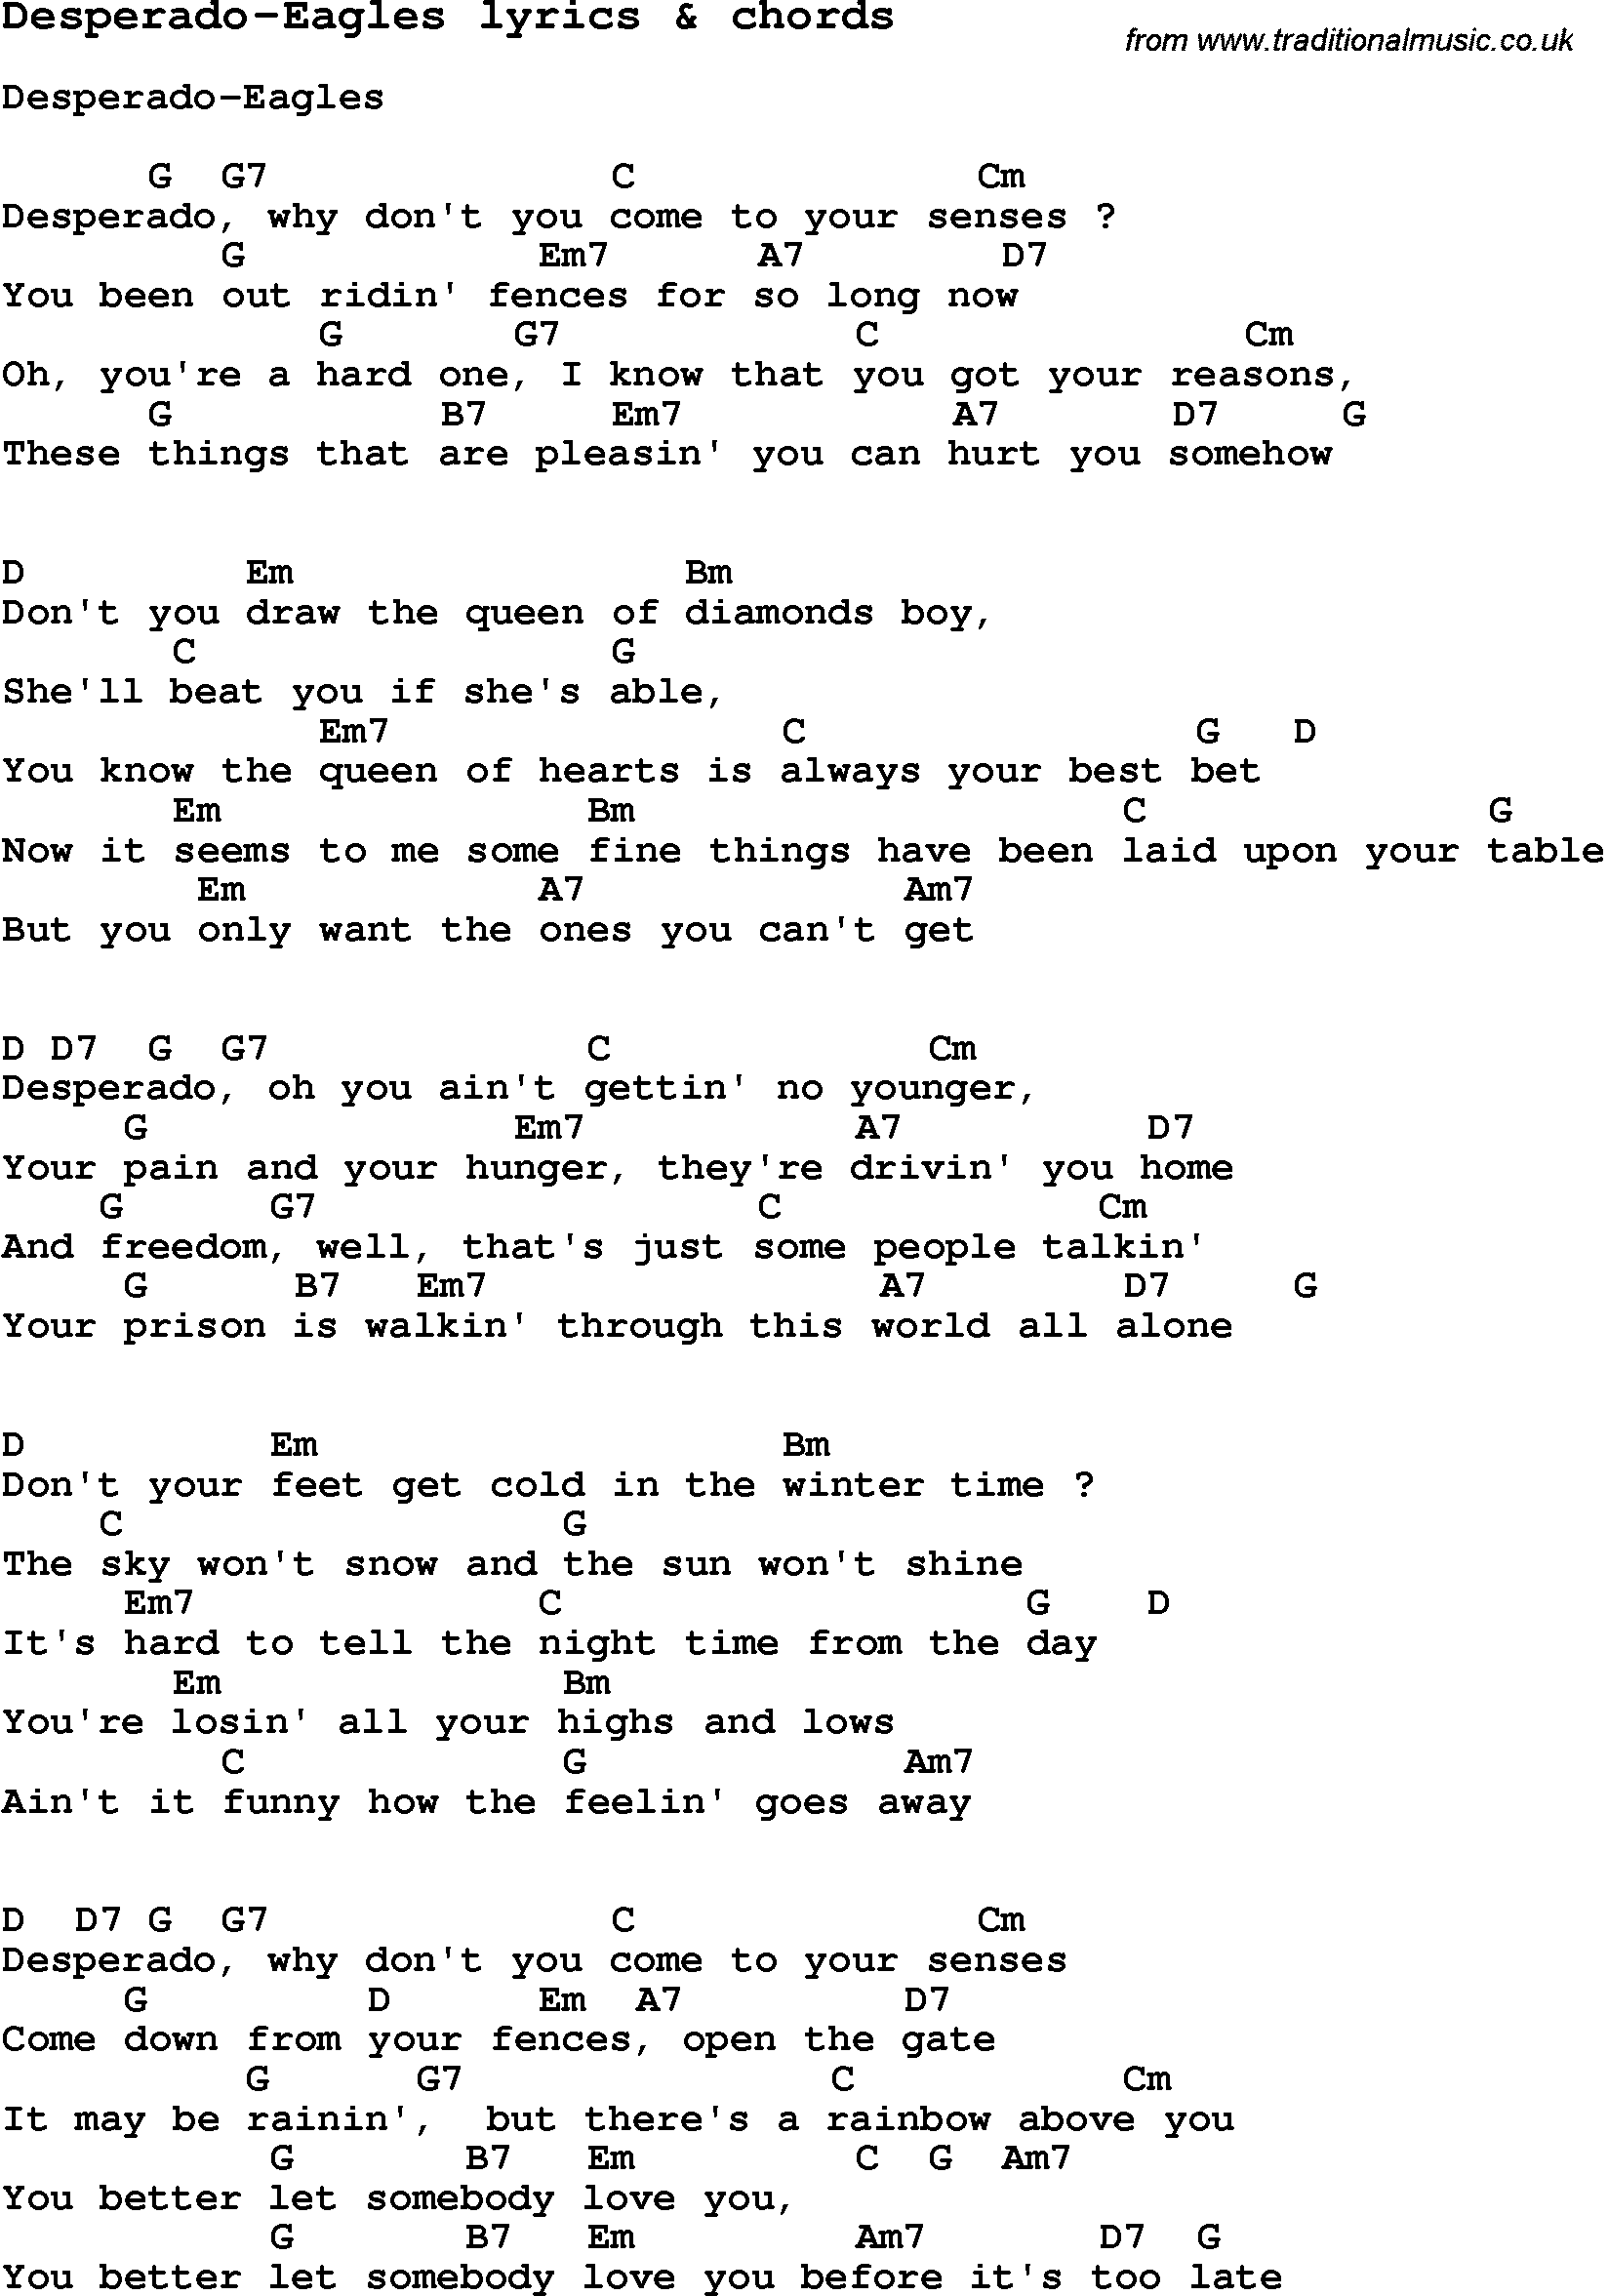 The Eagles: Desperado  Great song lyrics, Music quotes lyrics, Love songs  lyrics